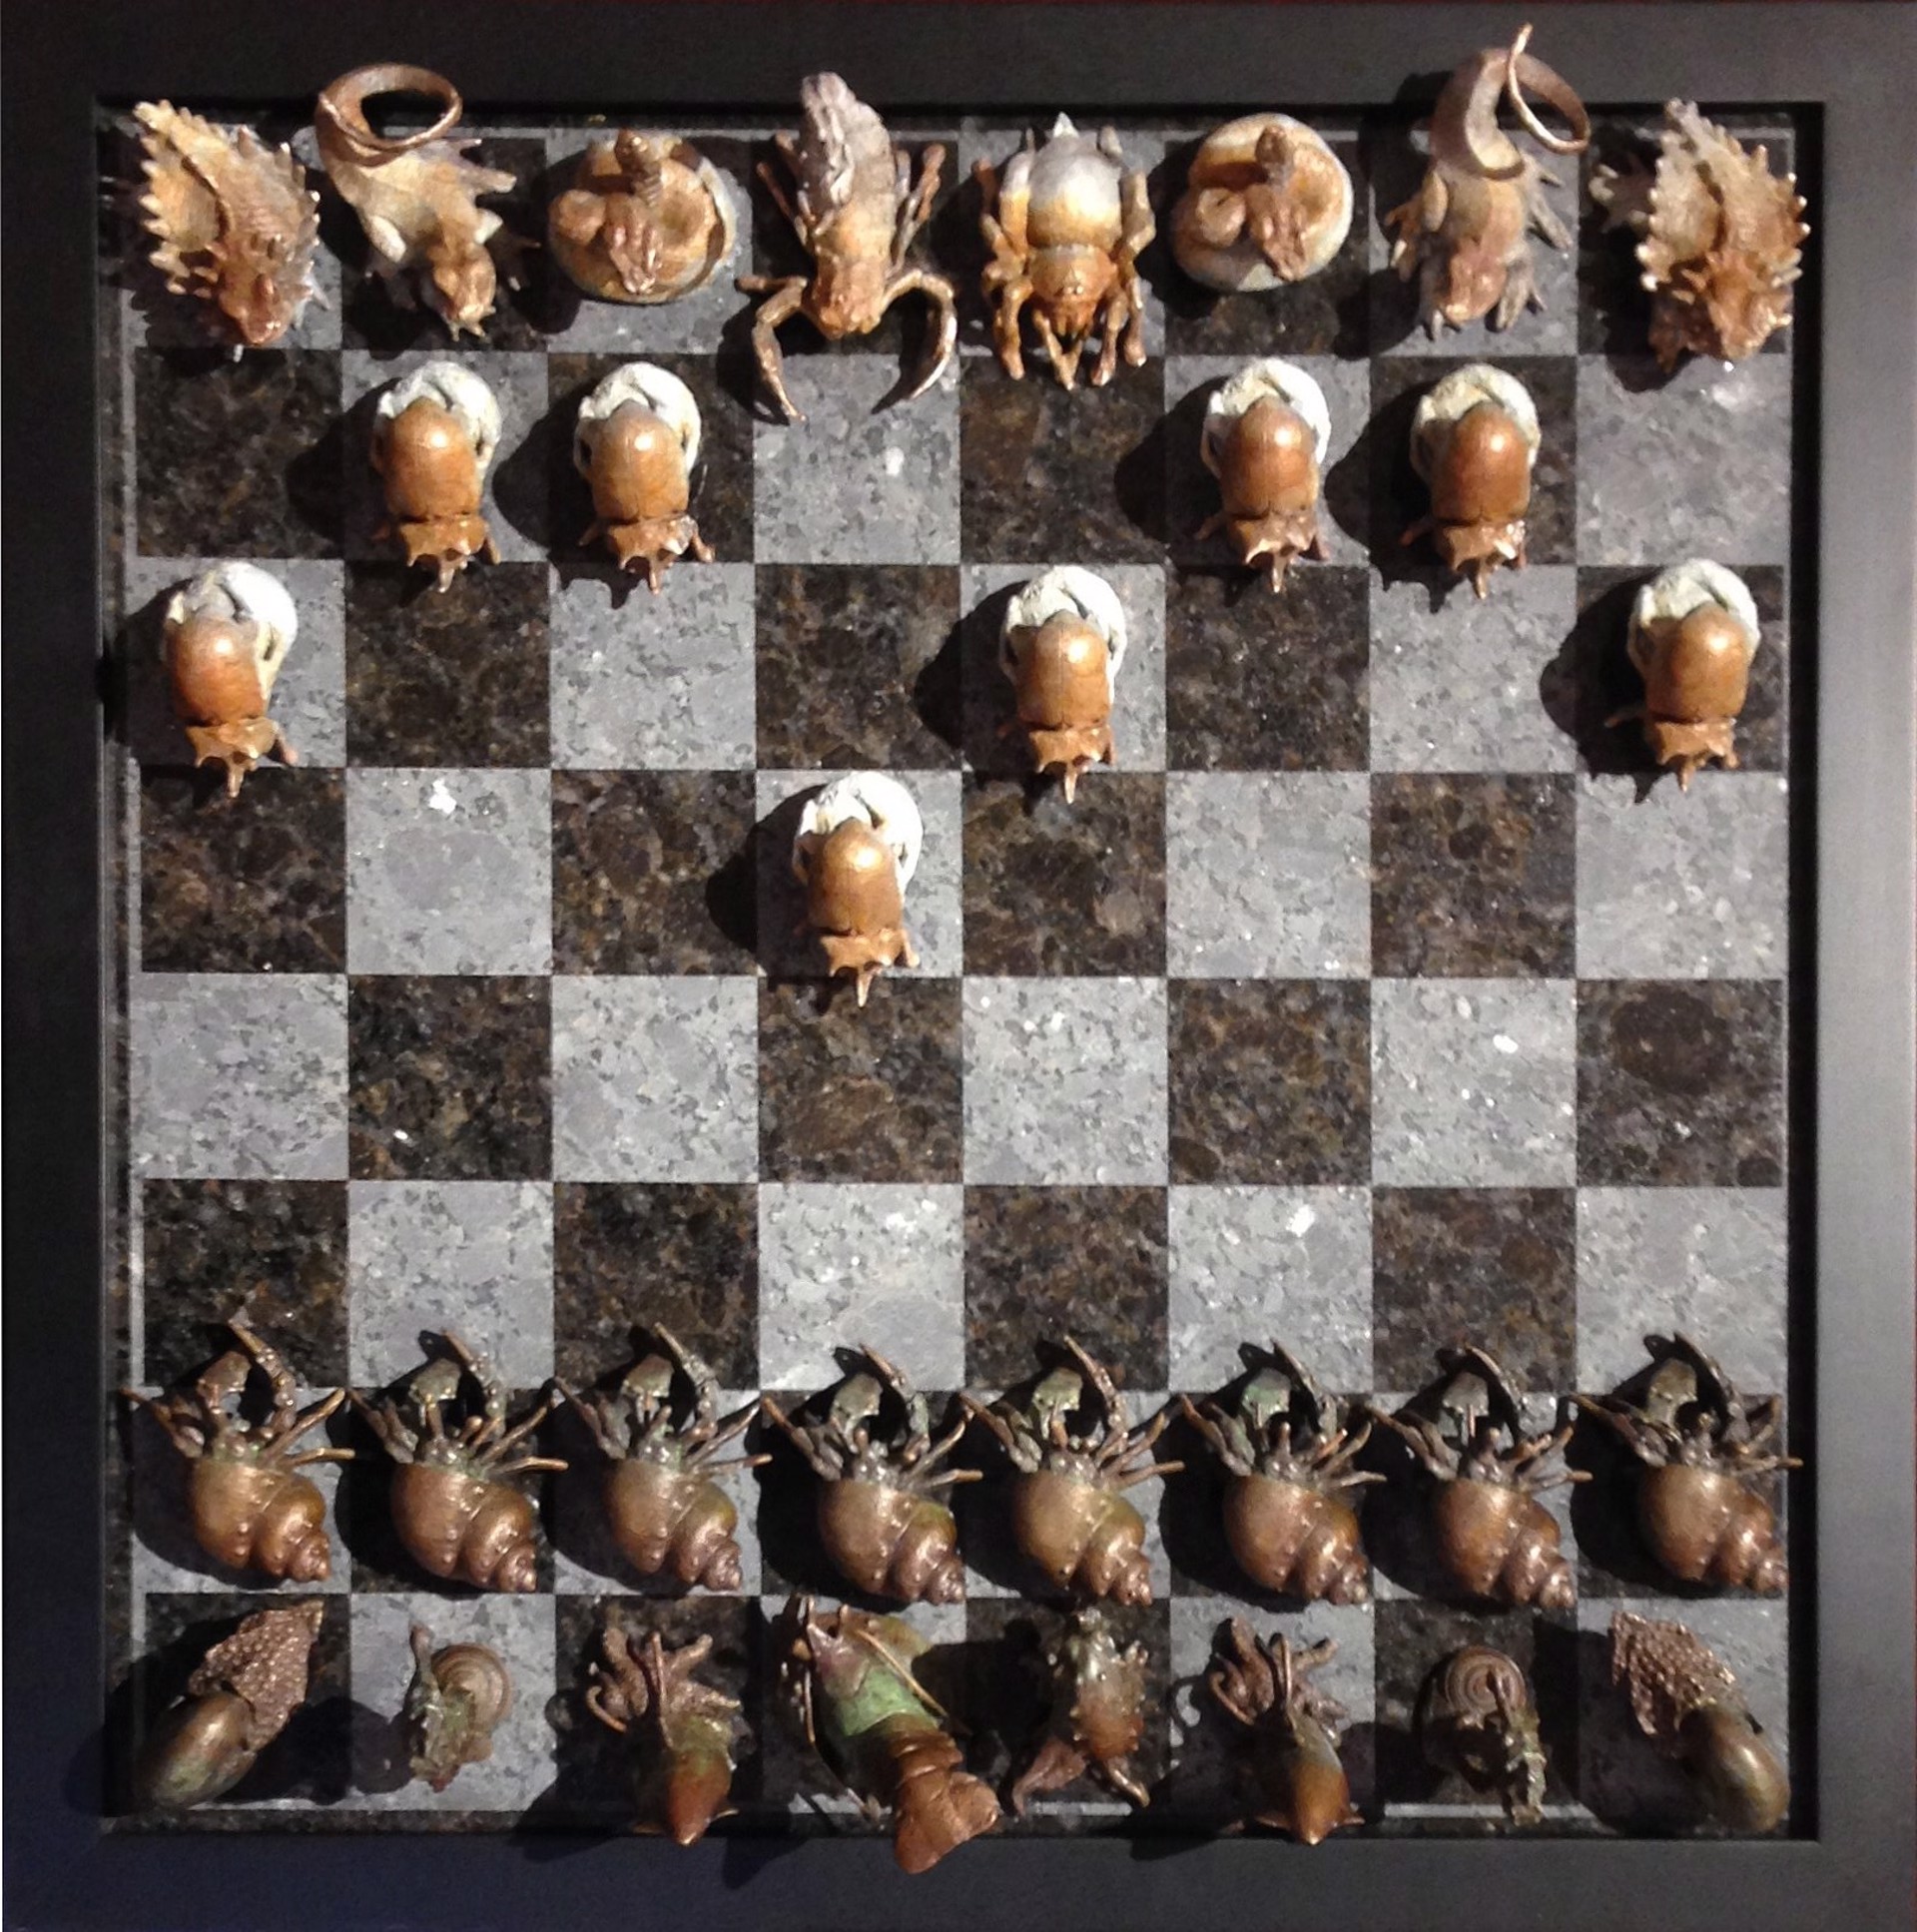 Chess Set II by Dan Chen